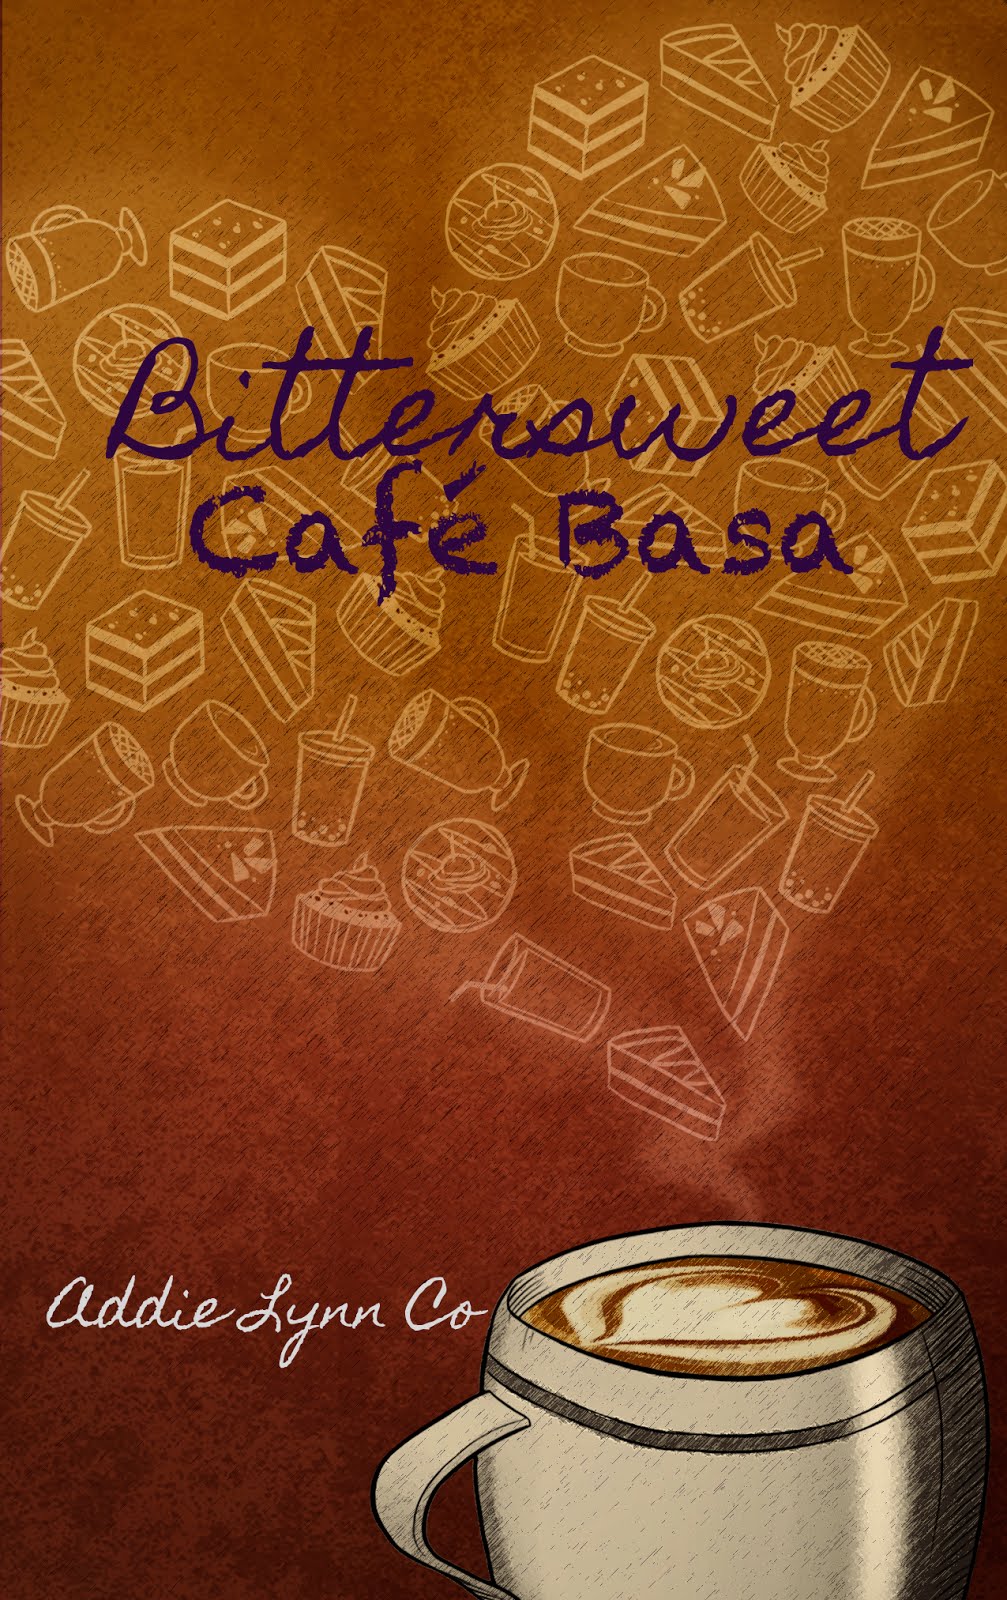 Bittersweet Café Basa